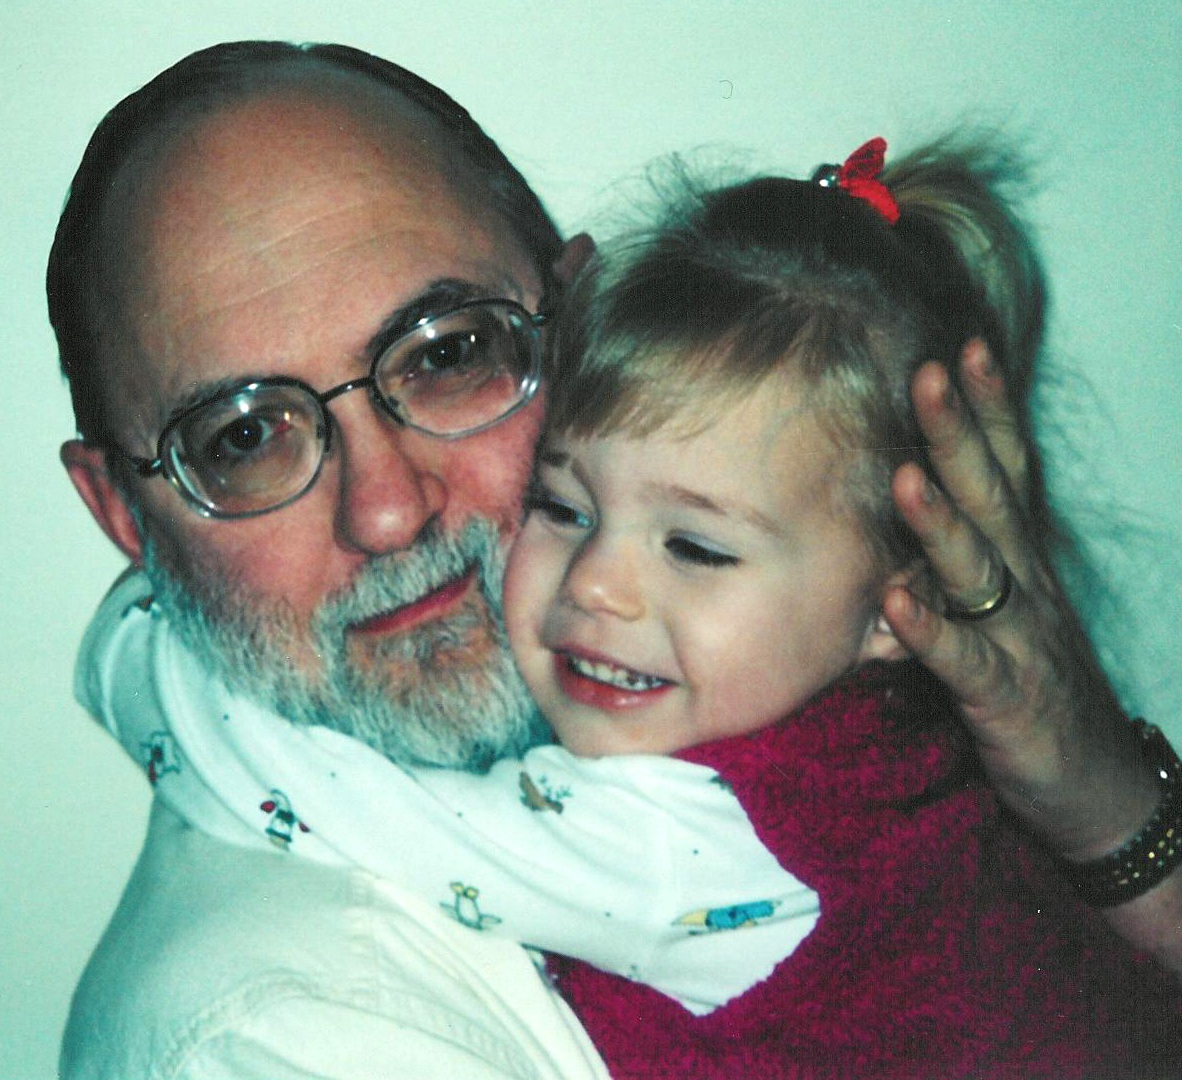 Photo of Sophia Lane Morton with her Grandpa Tom Plymate, Christmas 2003